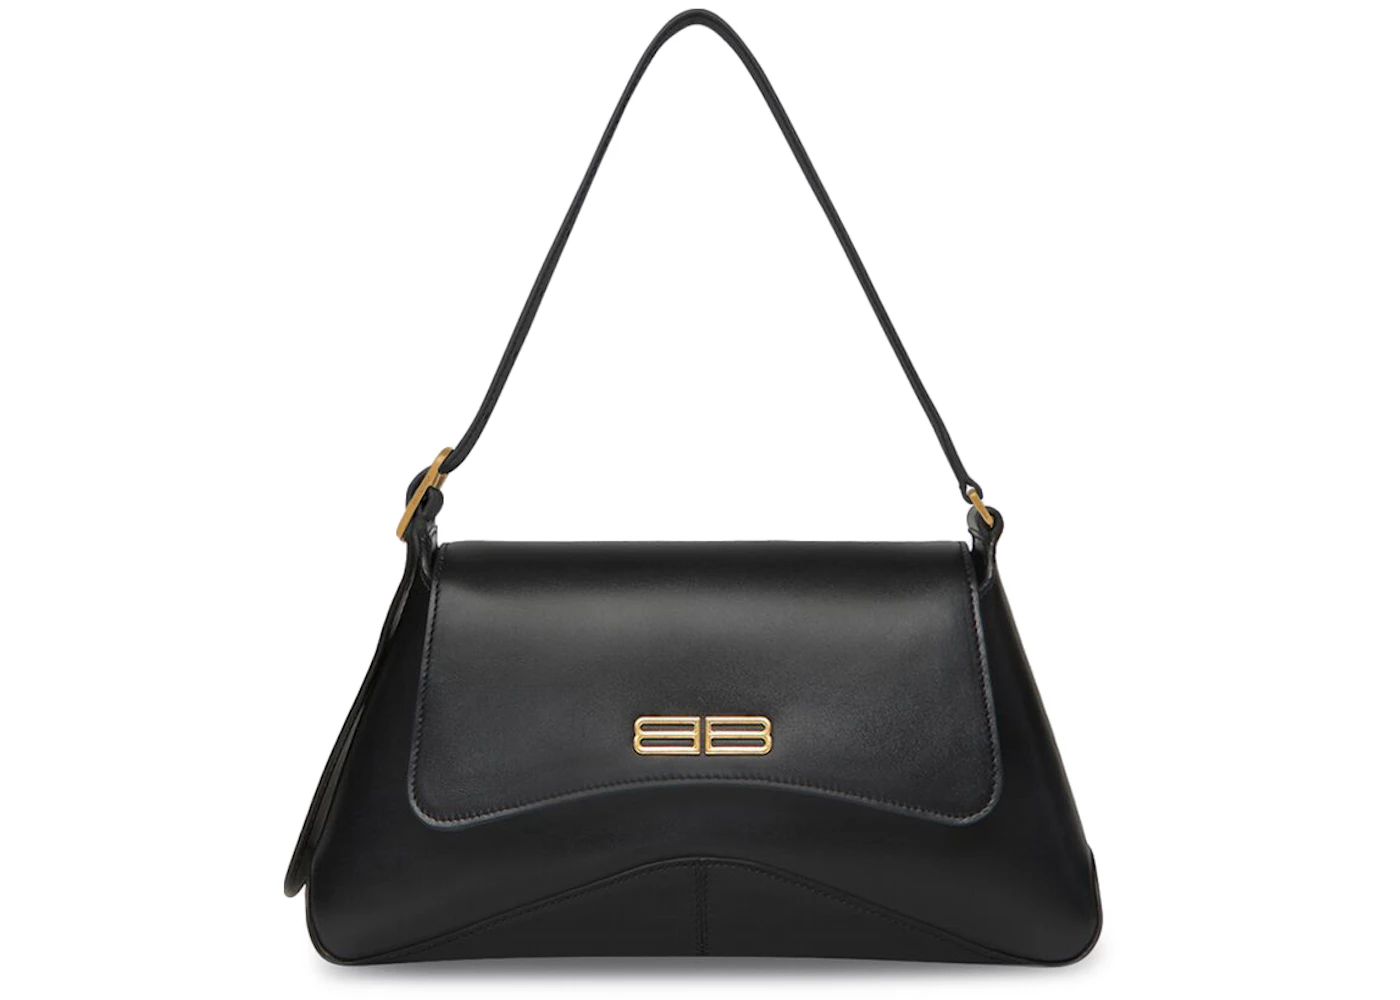 Medium flap size #luxurytok #fyp #designerbags